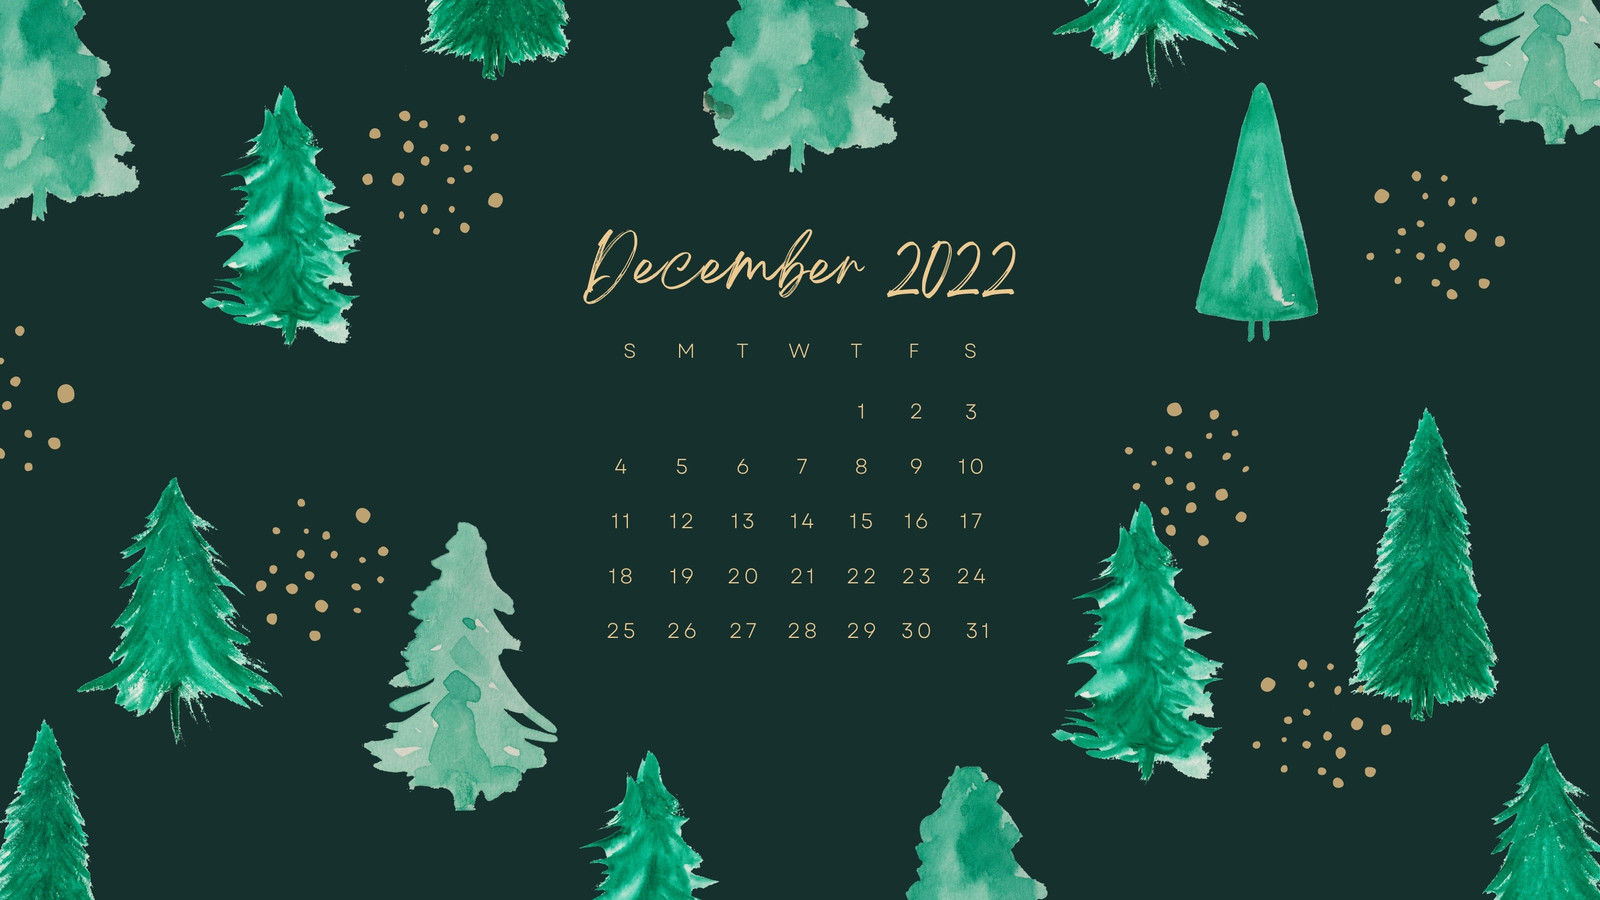 Christmas Decoration Desktop Wallpapers